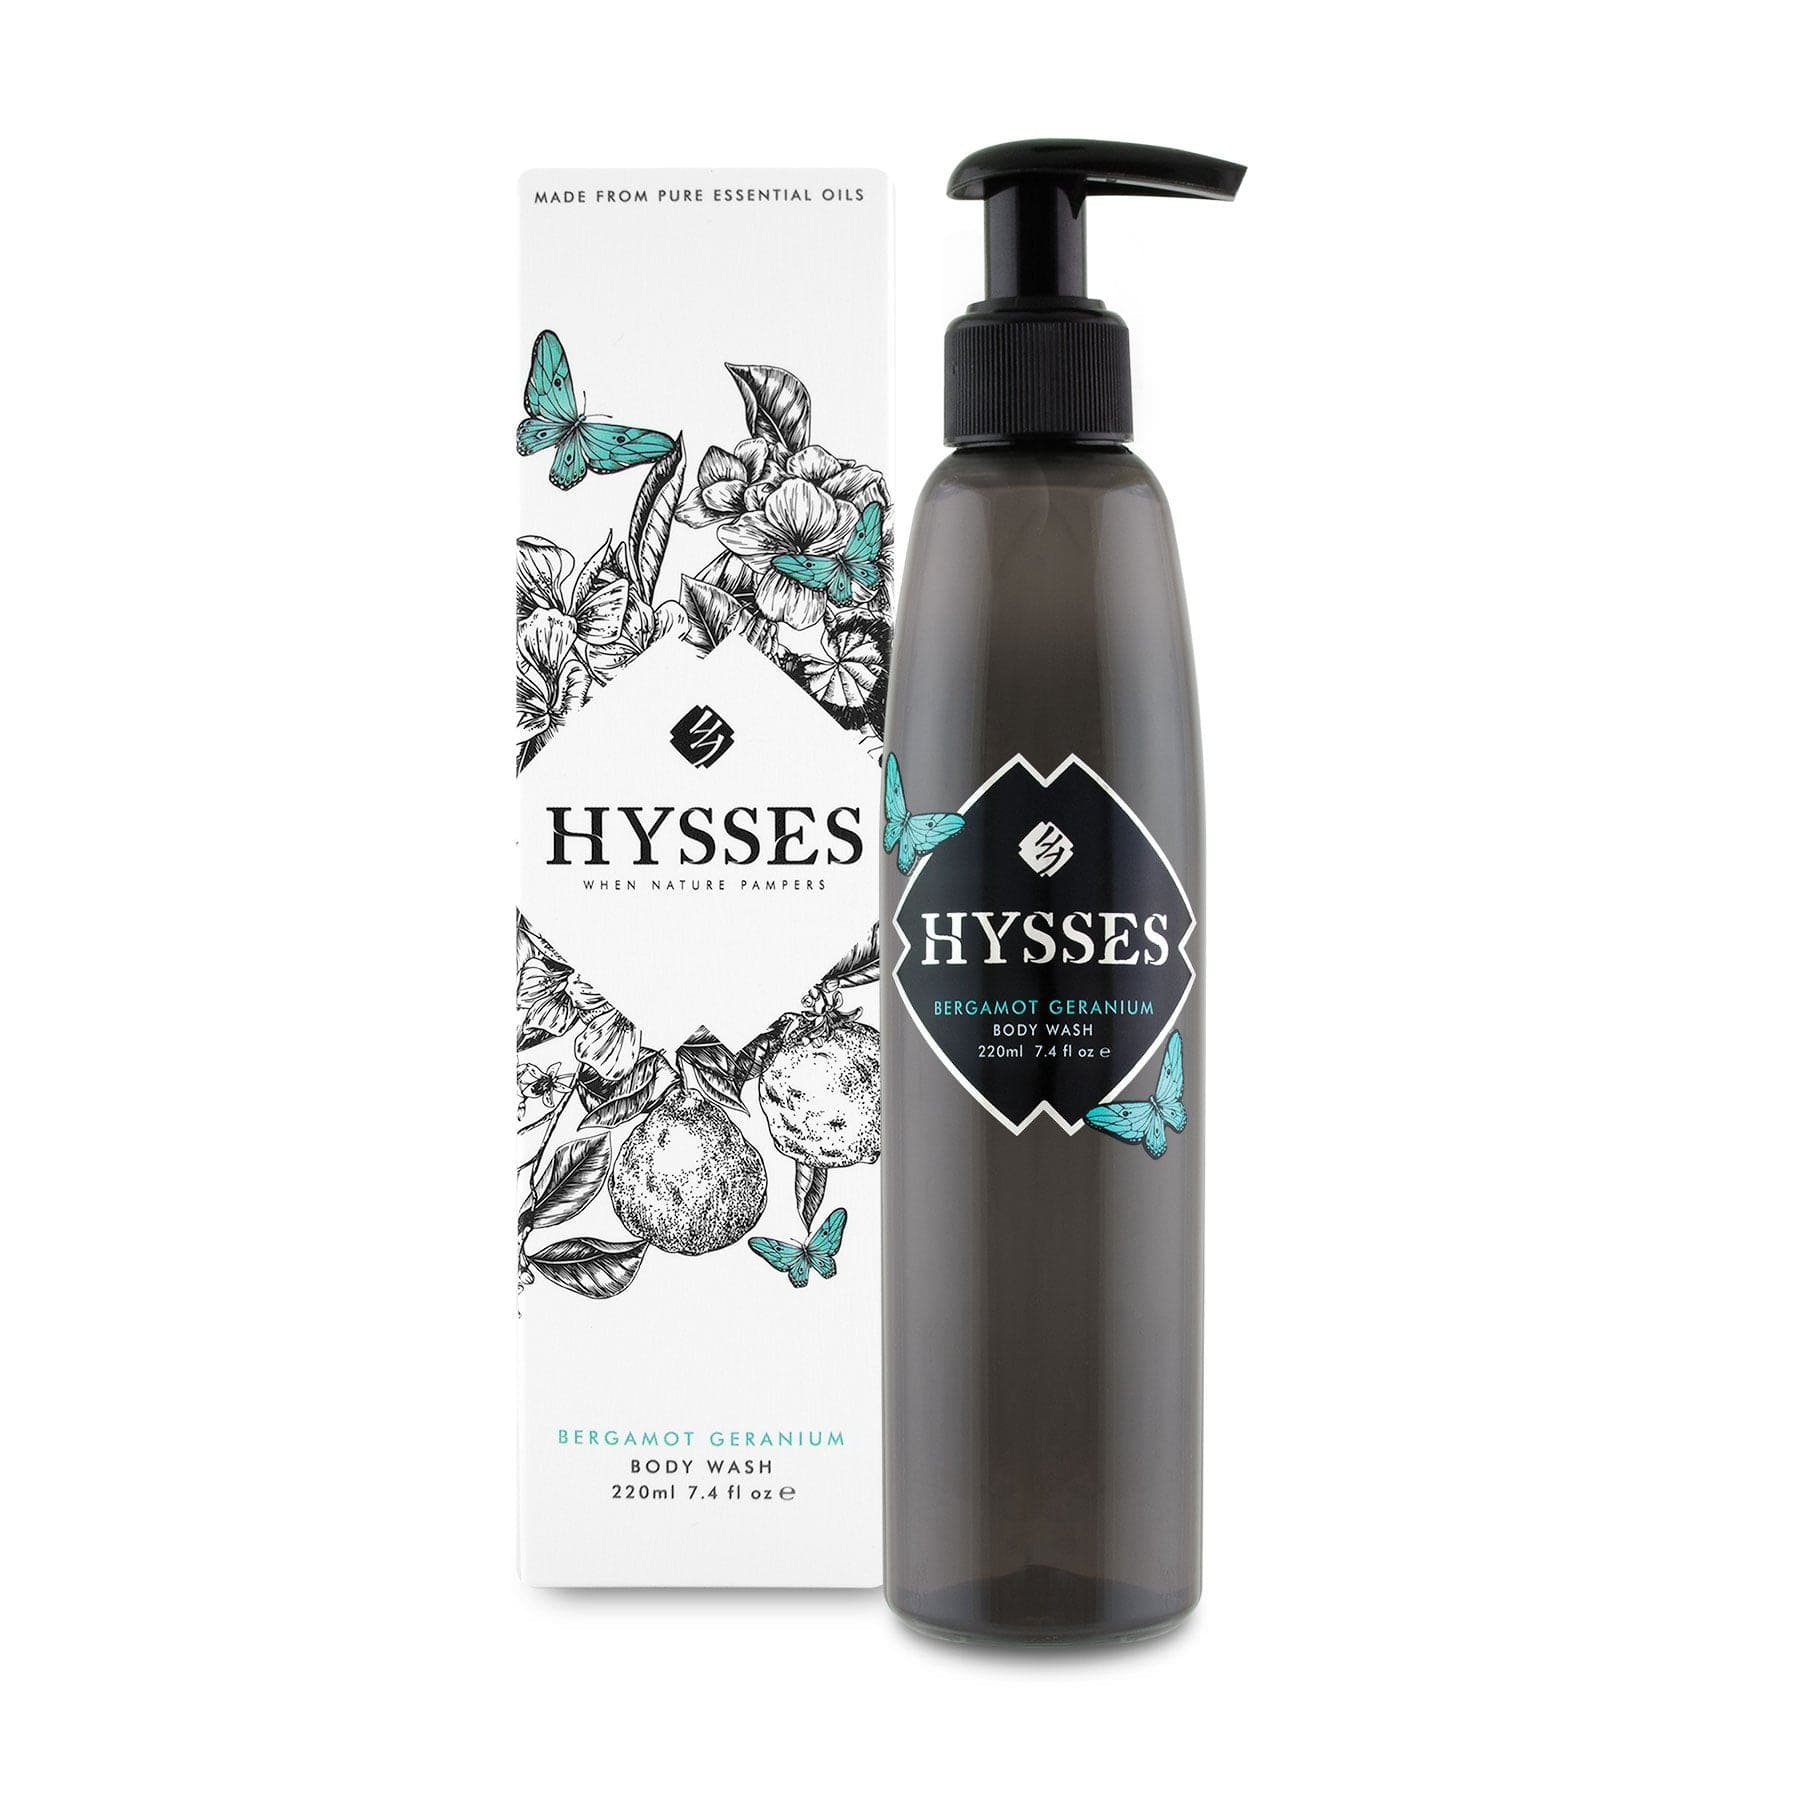 Hysses Body Care Body Wash Bergamot Geranium, 220ml